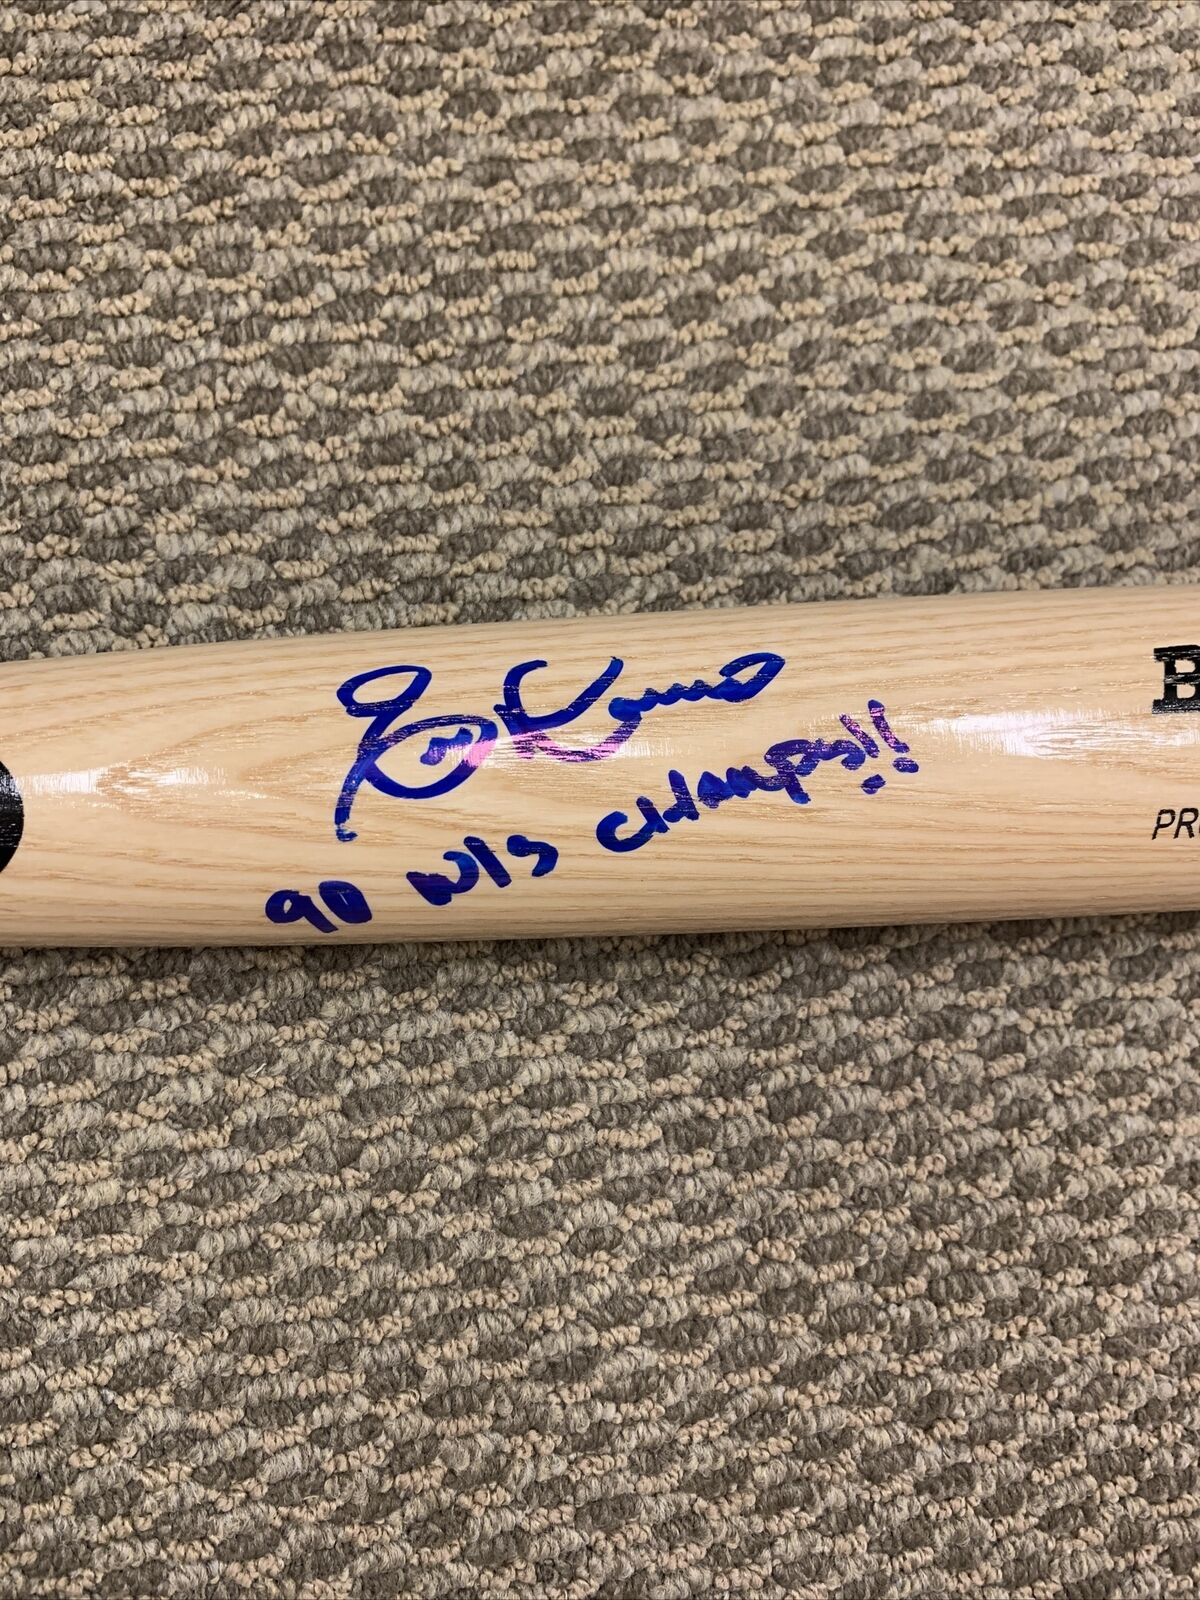 Eric Davis Autographed Signed 90 Ws Champion Big Stick Bat Cincinnati Reds